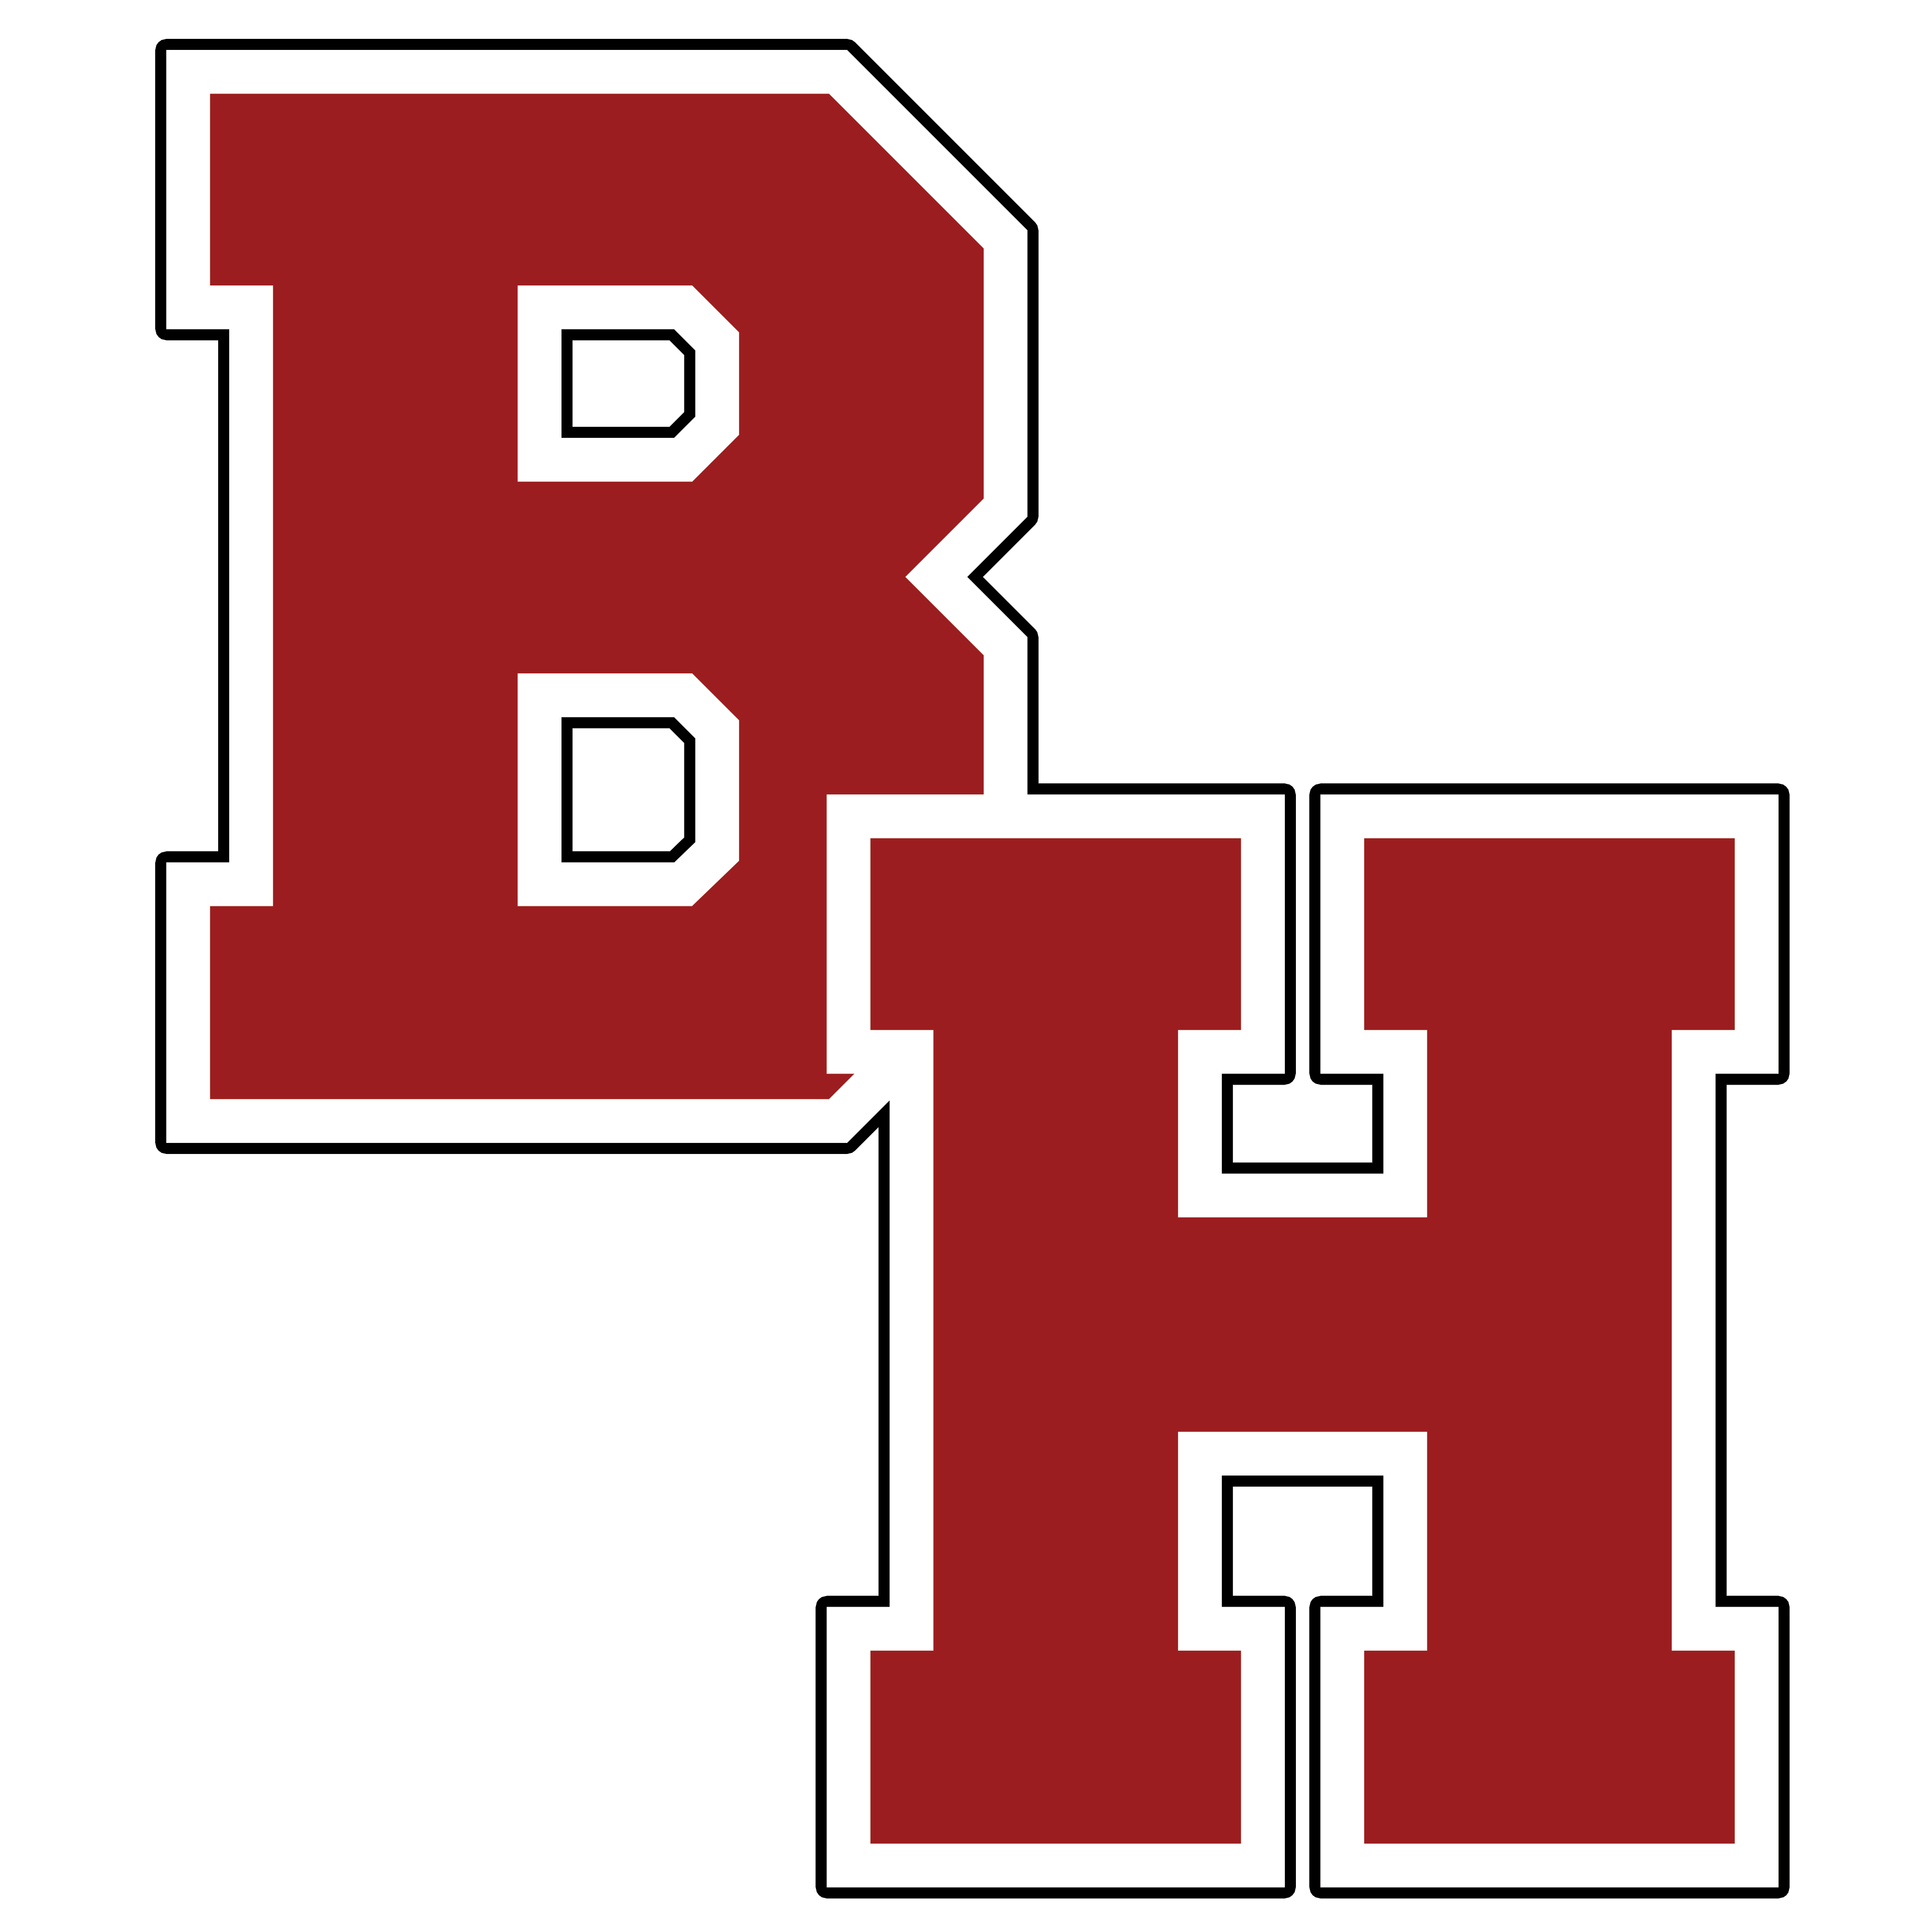 Organization logo of Byram Hills Central School District